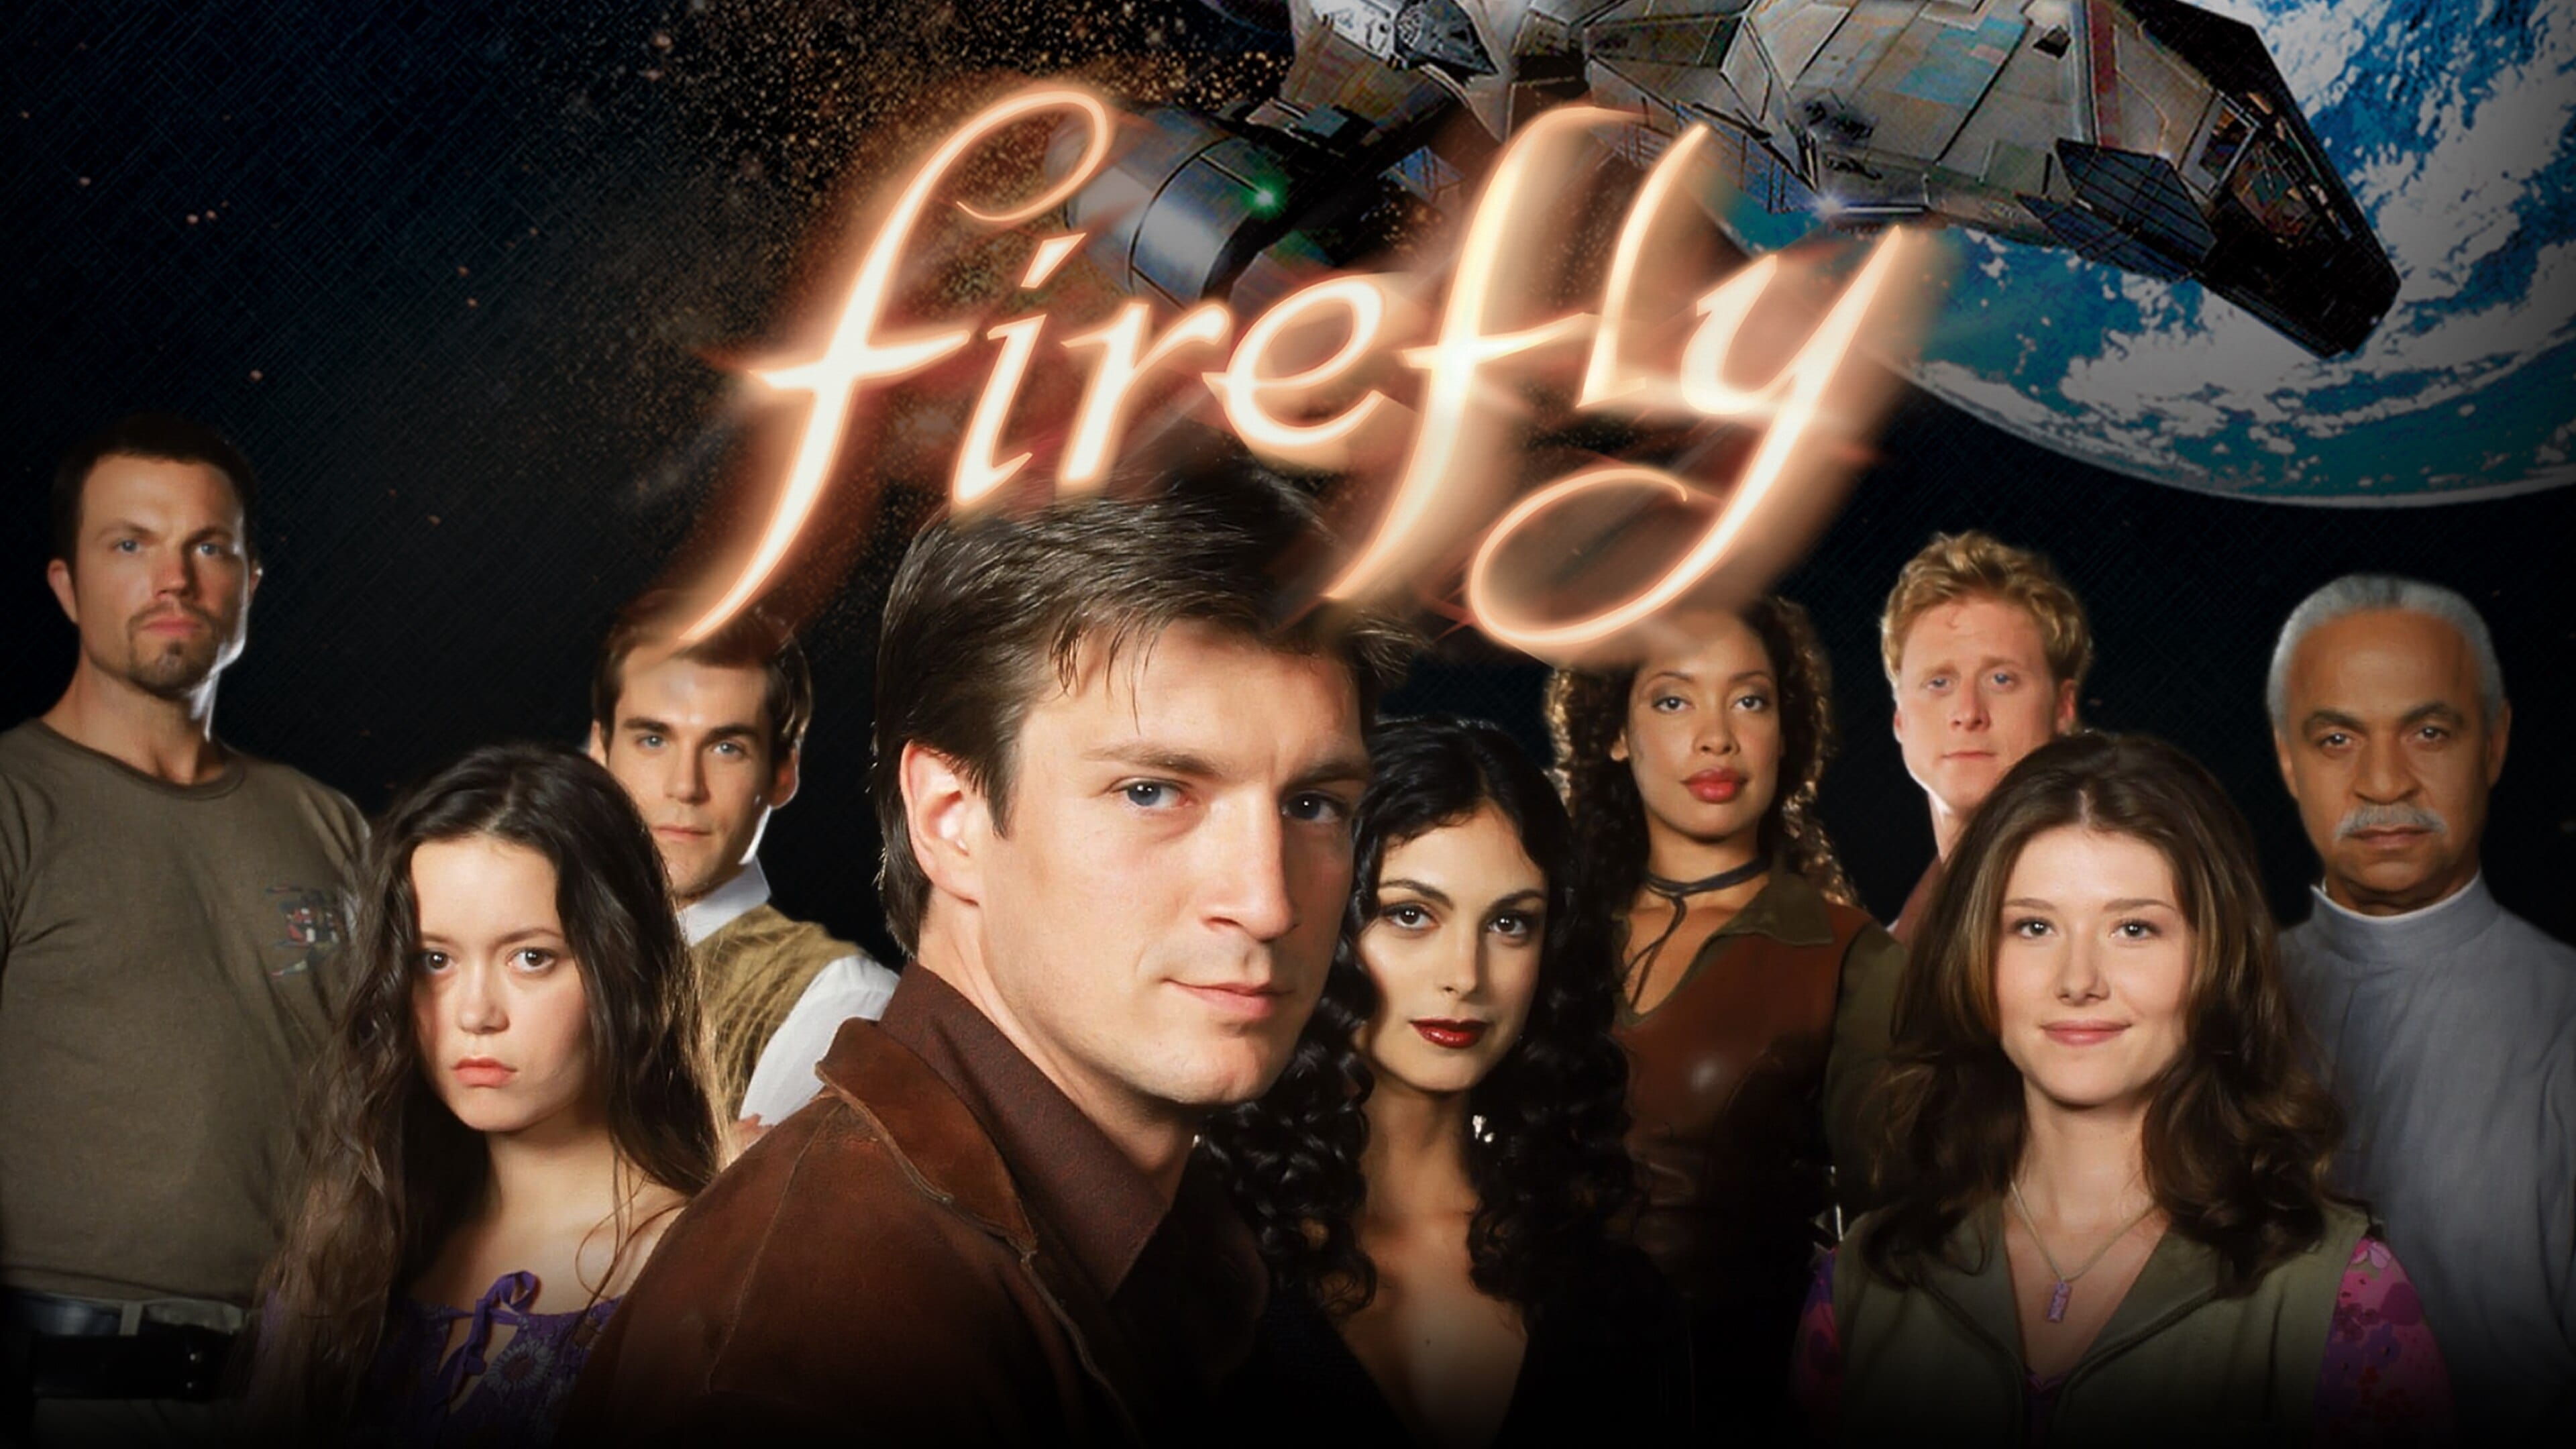 Firefly 4k Ultra HD Wallpaper Background Image